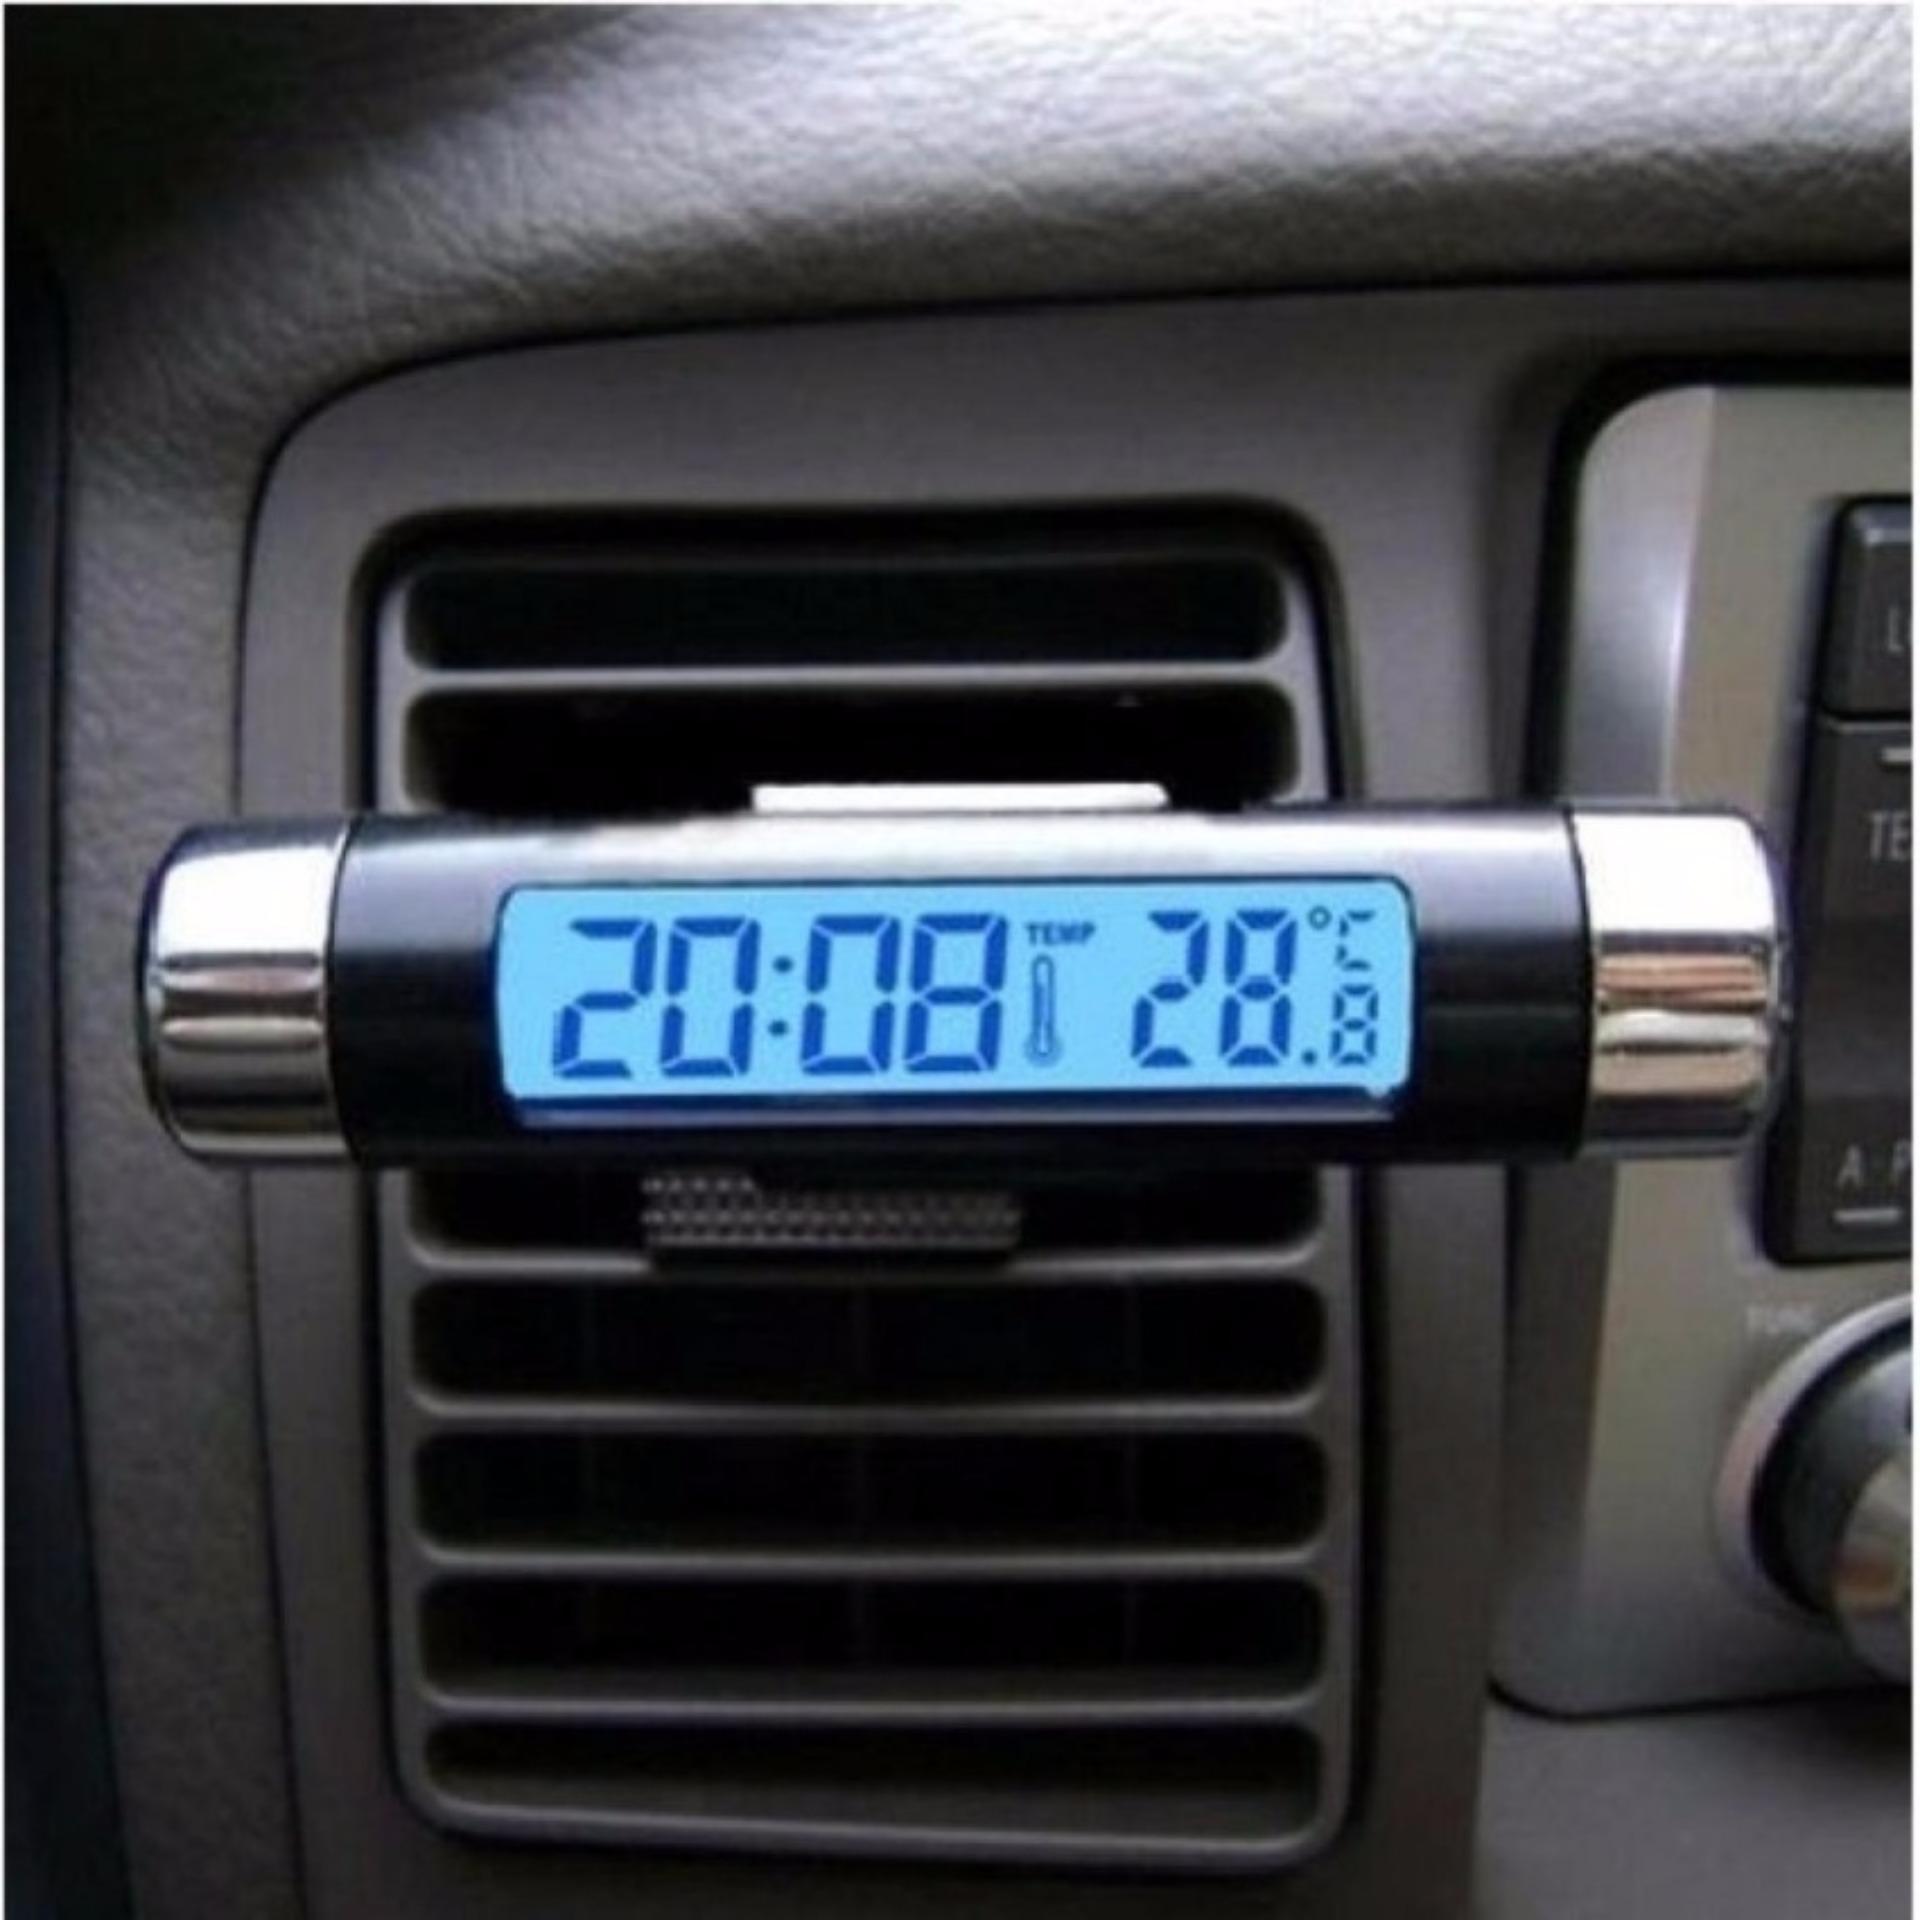 Eigia Thermometer Digital Backlight Car Termometer Mobil s2007 - Hitam